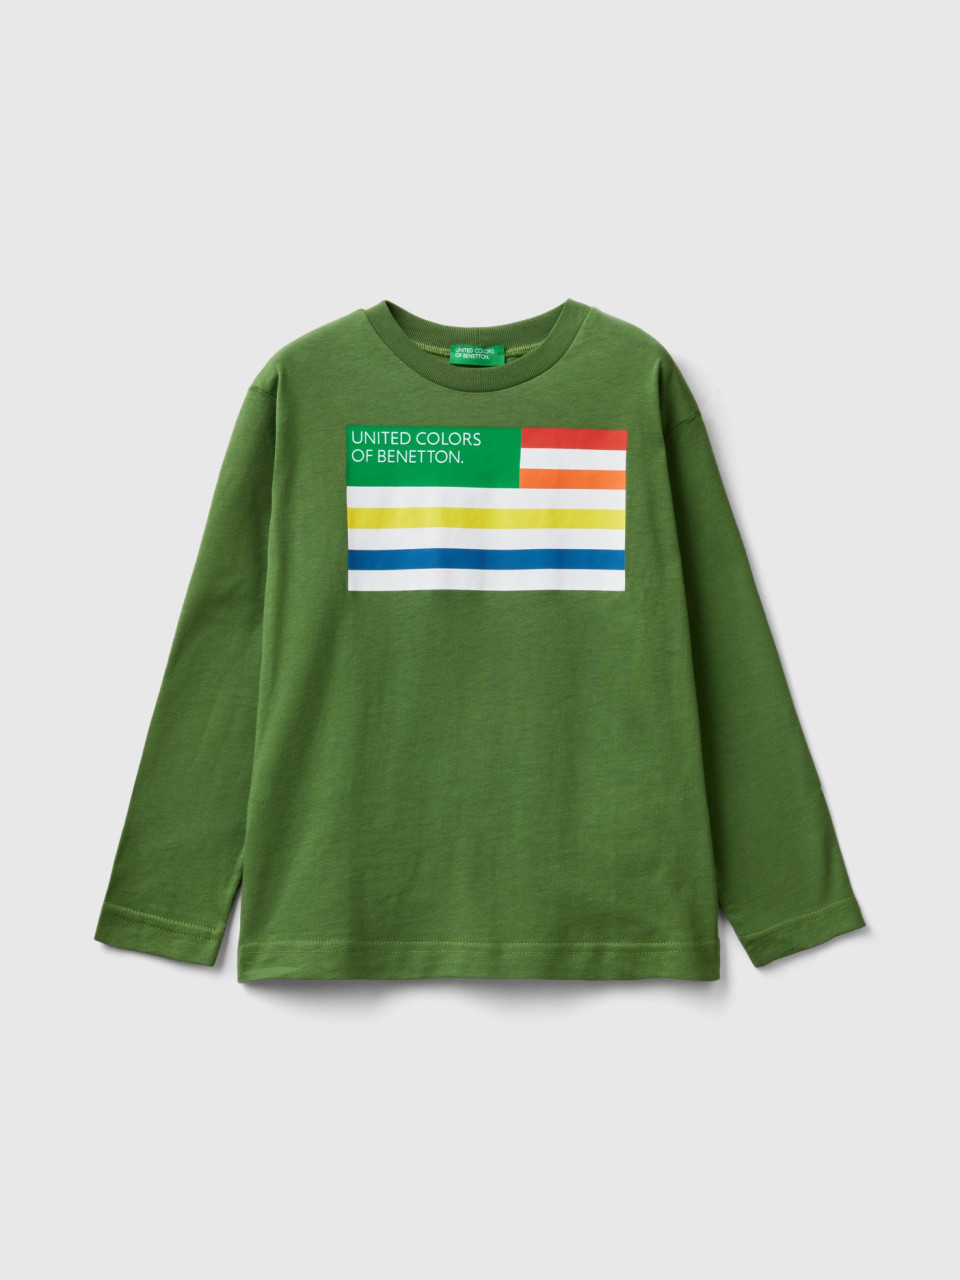 Benetton, Long Sleeve Organic Cotton T-shirt, Military Green, Kids